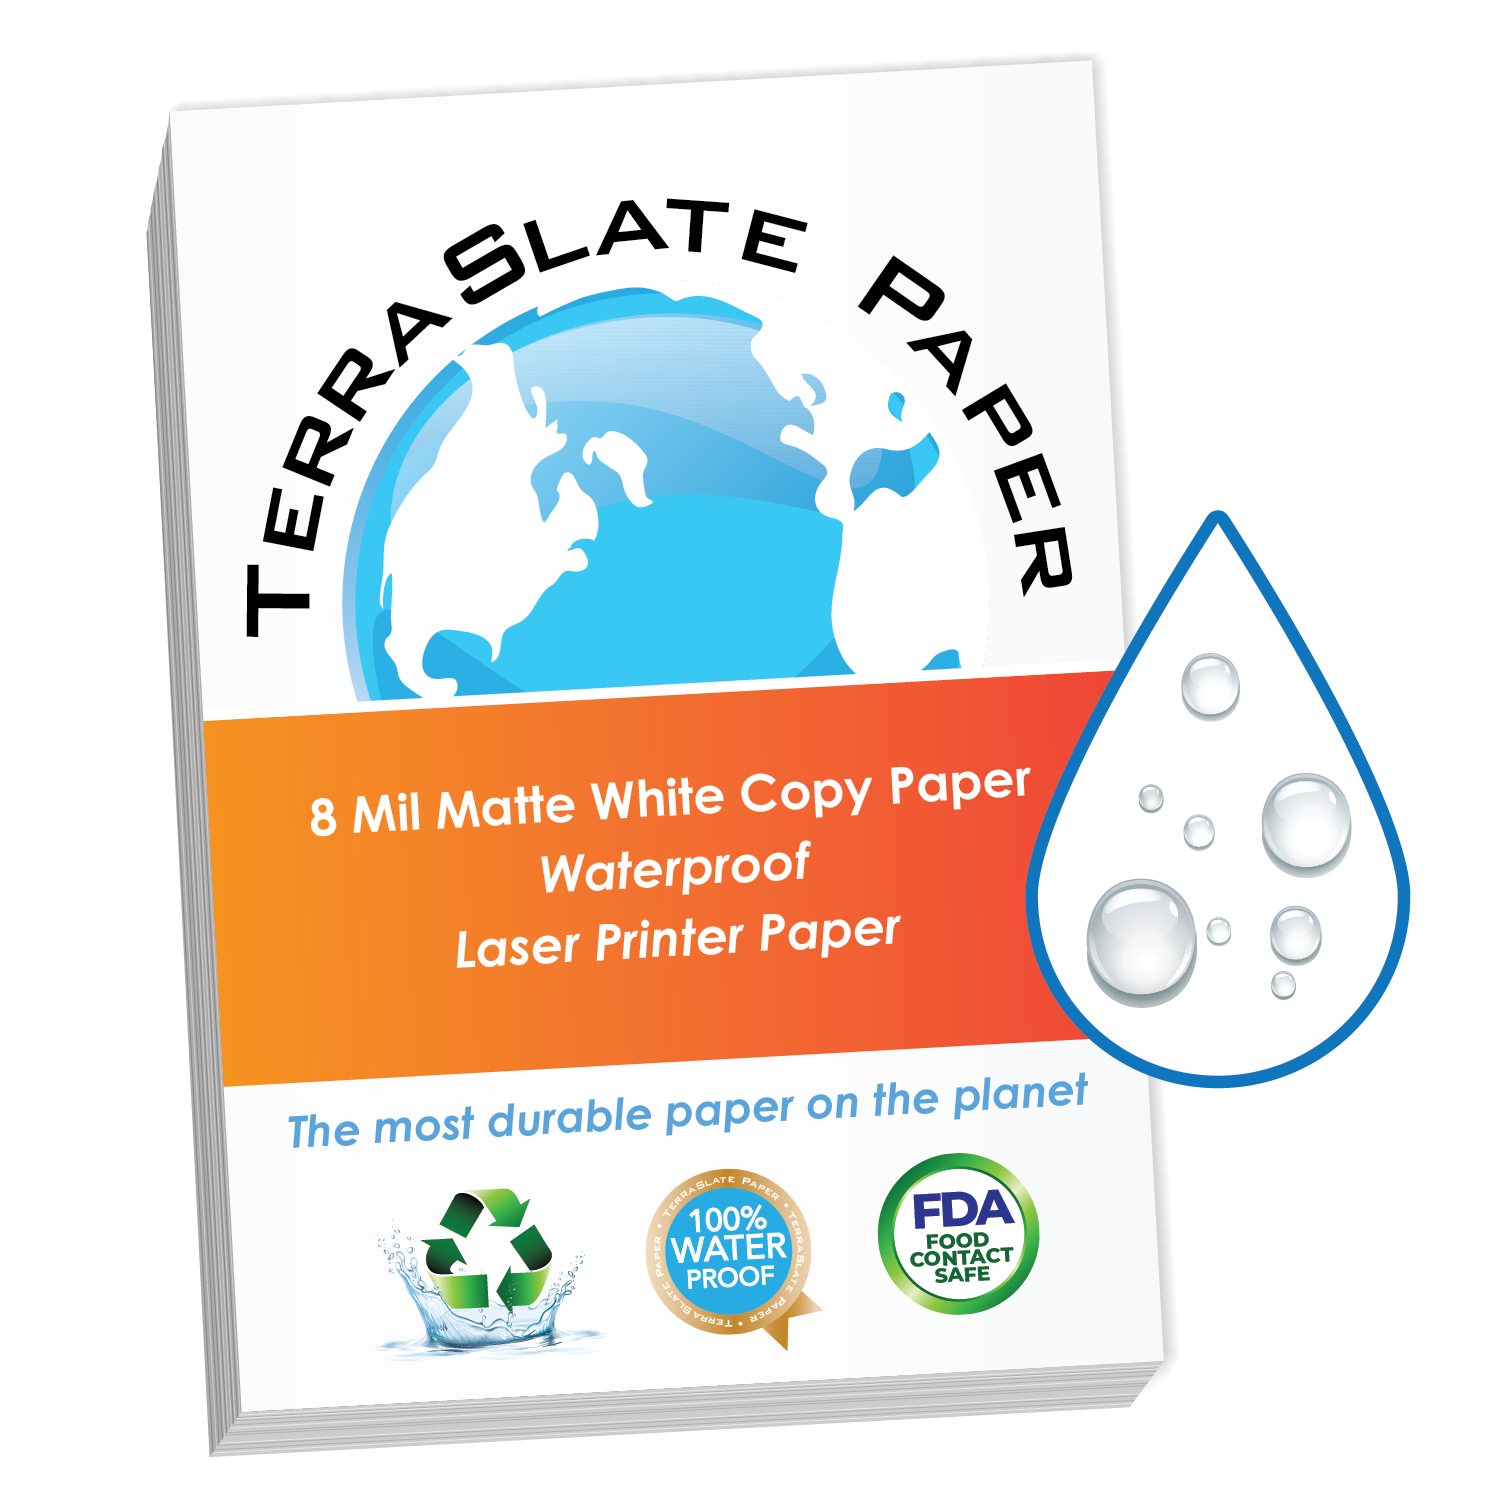 125um 200um Non Tear & Heat Resistant Synthetic Paper For Laser